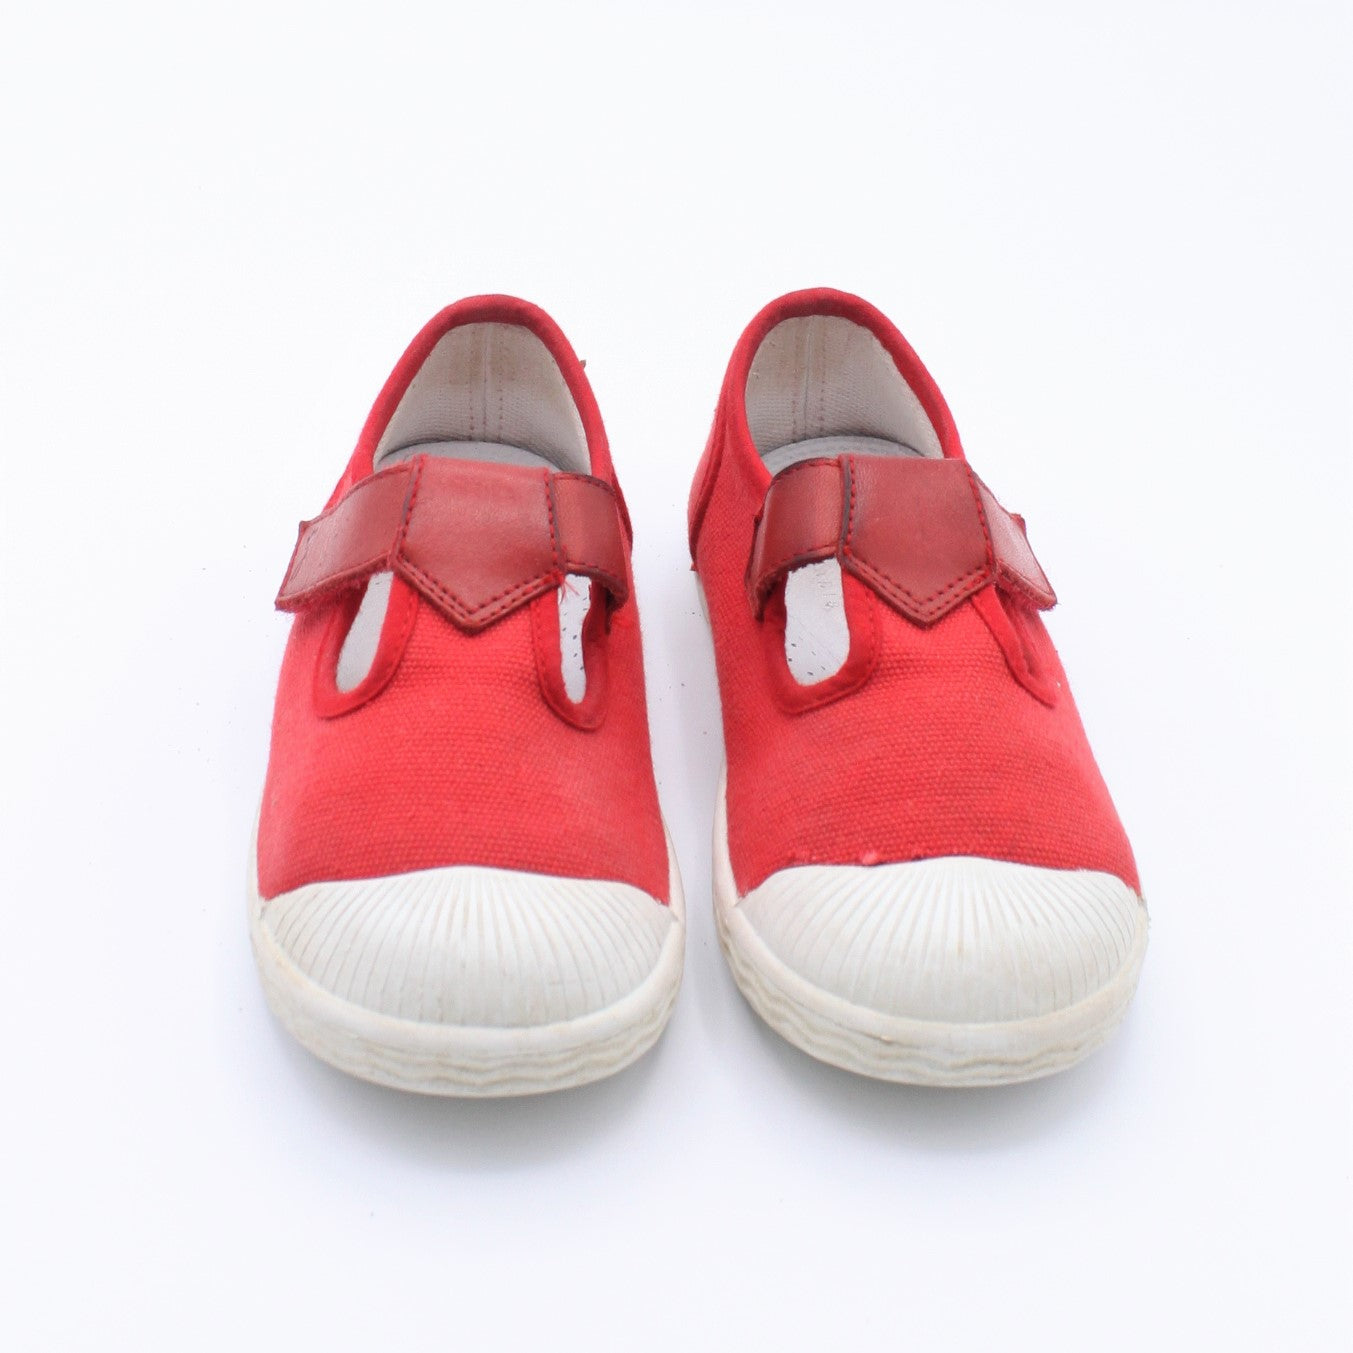 Pre-loved Shoes (EU27)